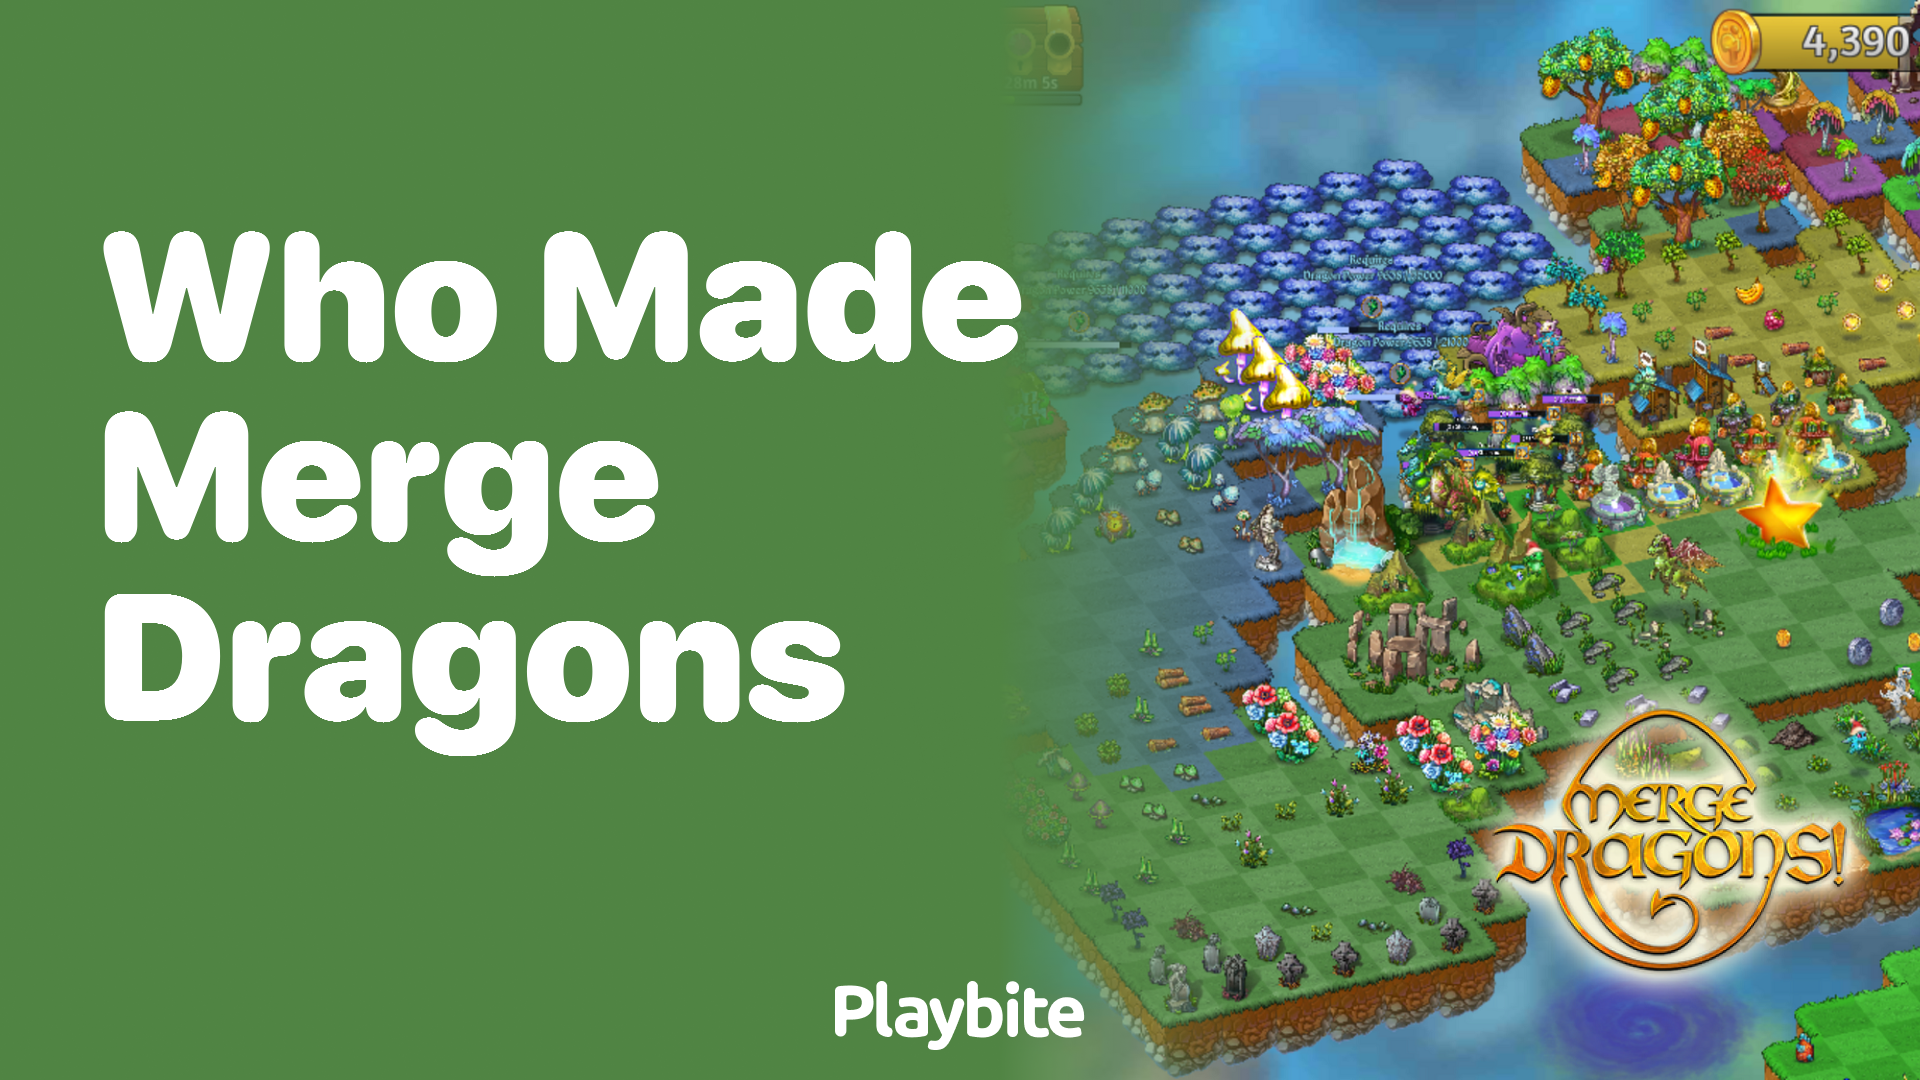 Who made Merge Dragons?